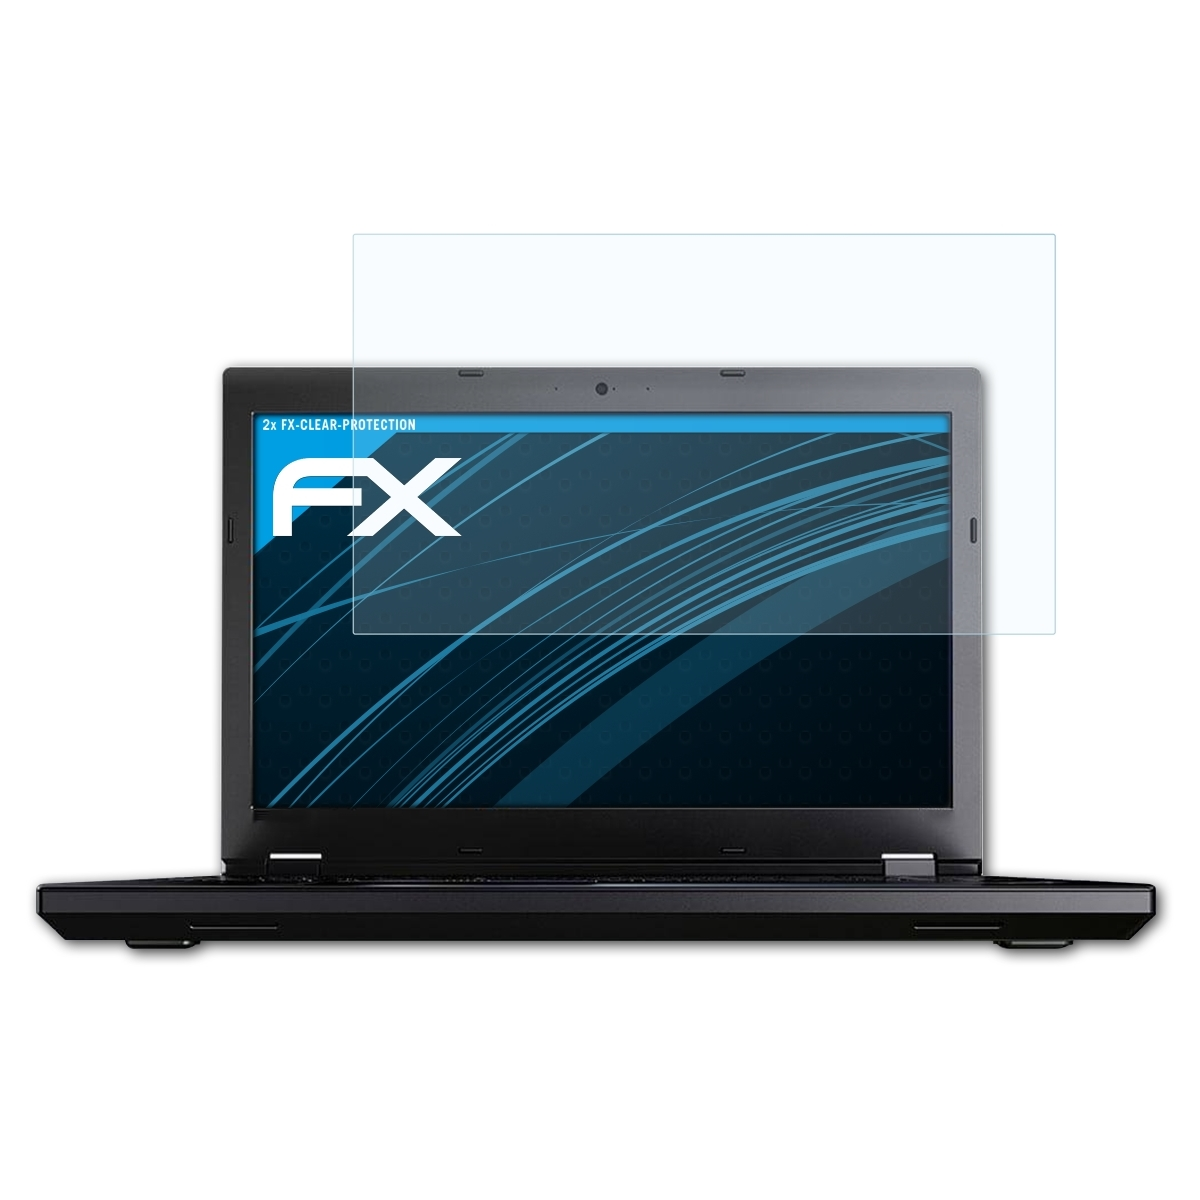 2x ThinkPad FX-Clear Lenovo Displayschutz(für ATFOLIX L560)